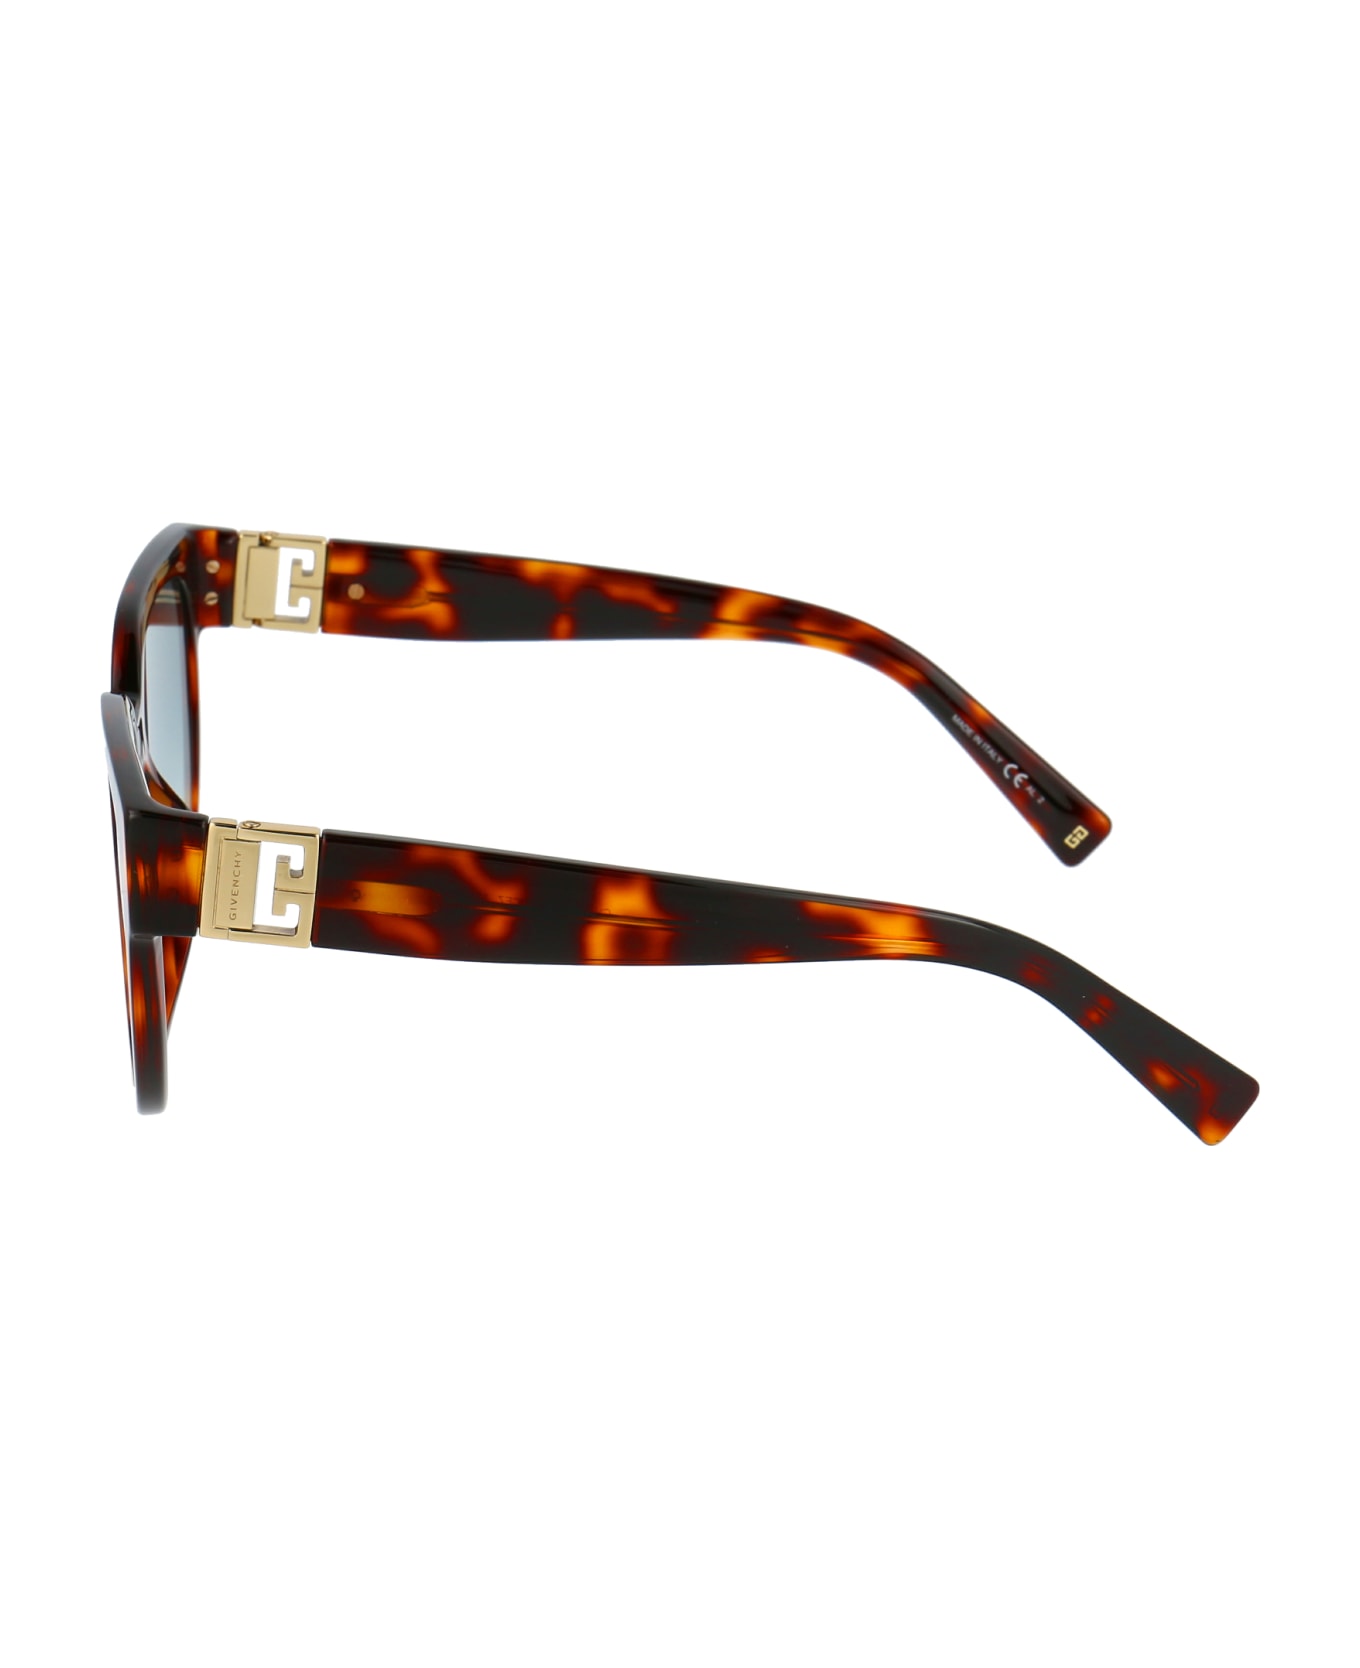 Givenchy Eyewear Gv 7155/g/s Sunglasses - 0UCEZ RED HAVNA